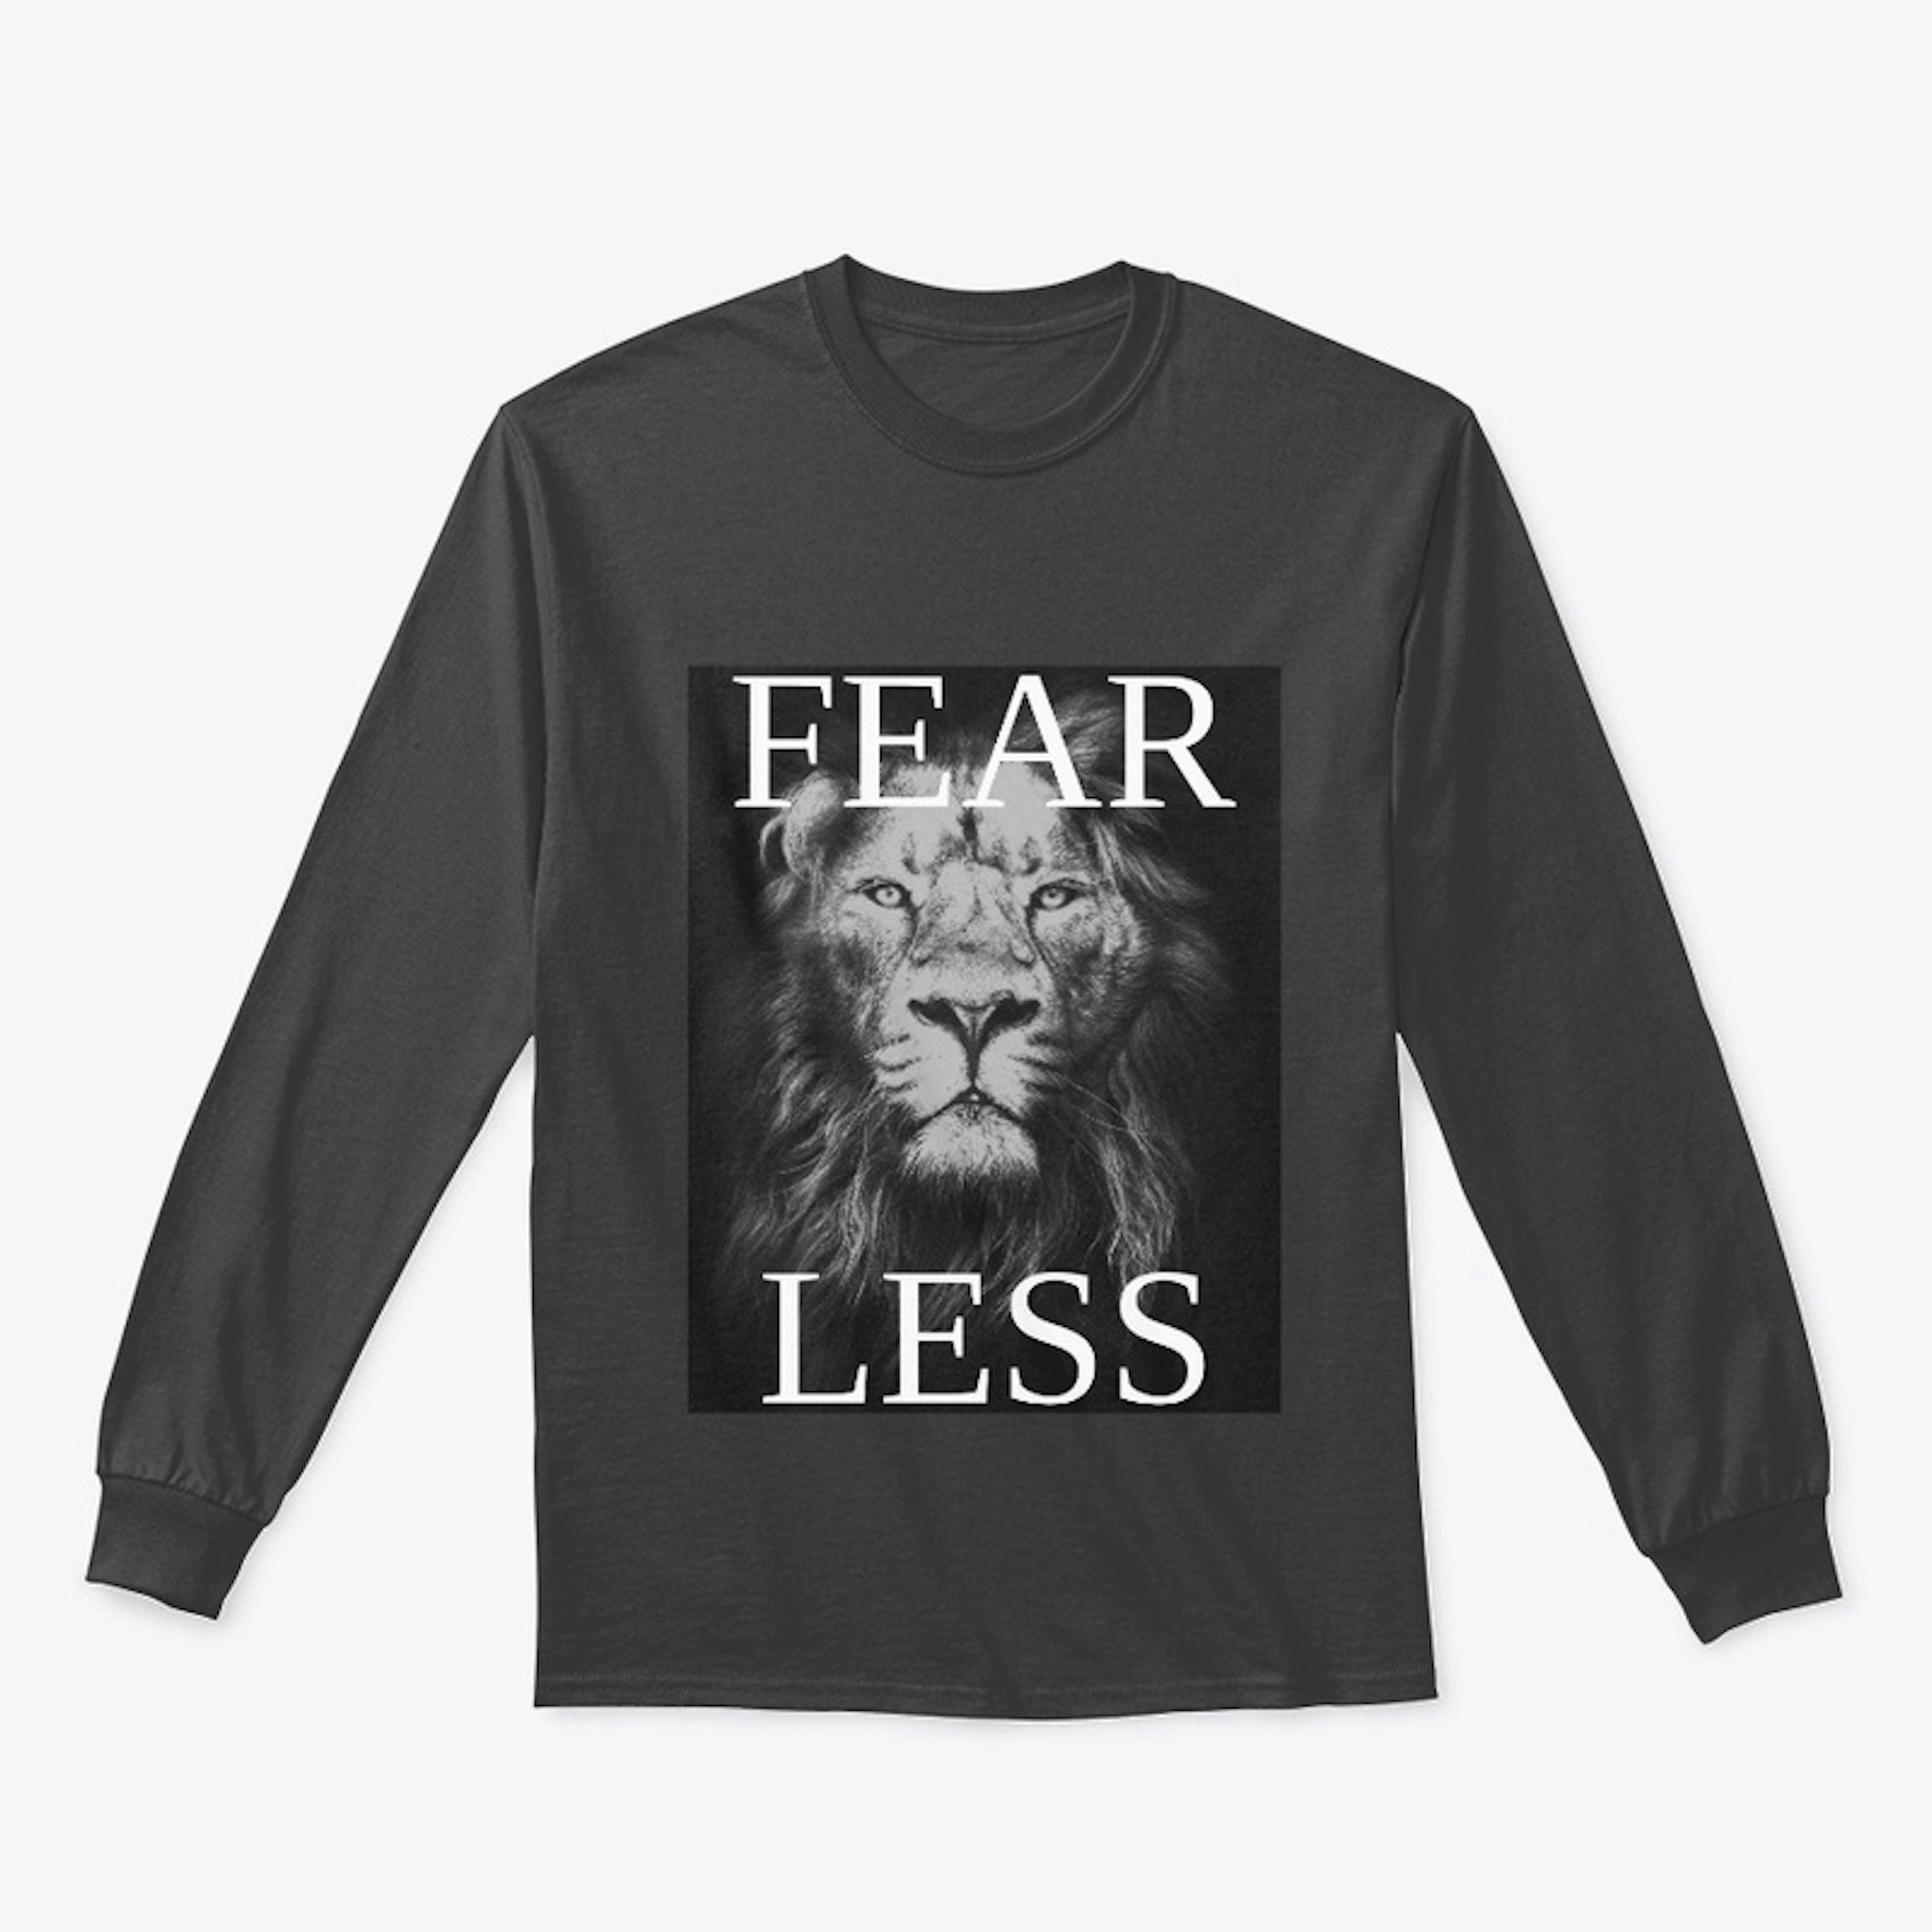 Fear Less (Fearless)